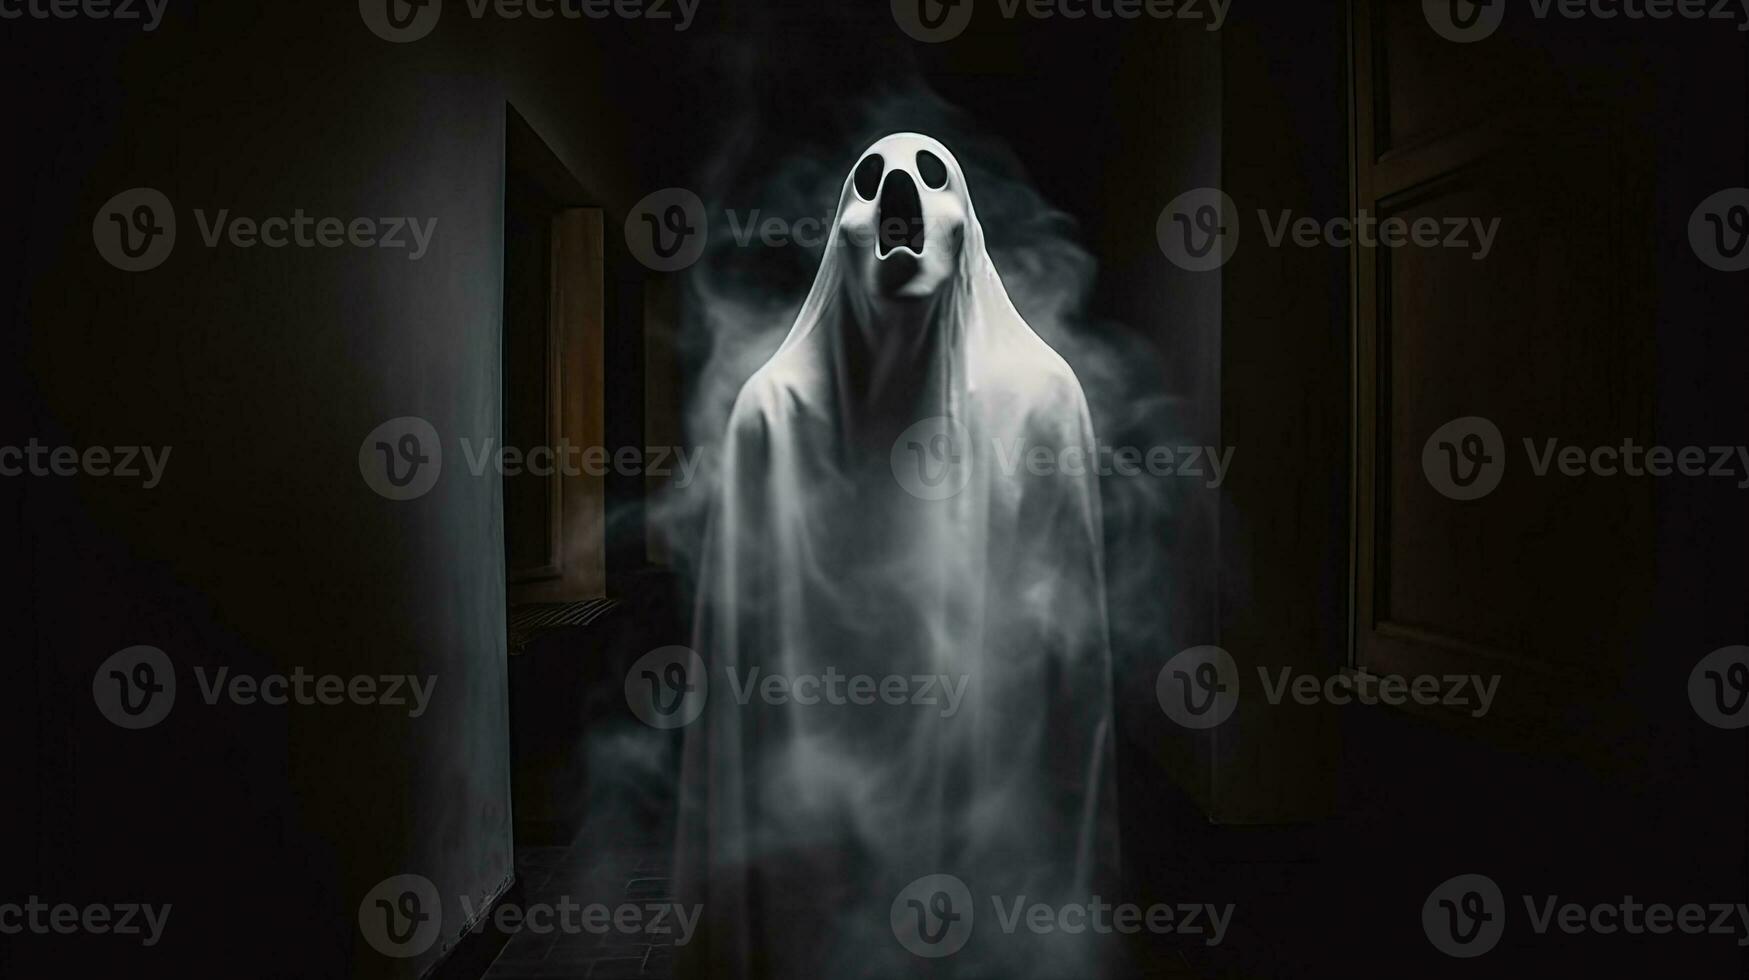 Halloween fantasma nel spaventoso vuoto Casa, buio misterioso sfondo. ai generato. foto